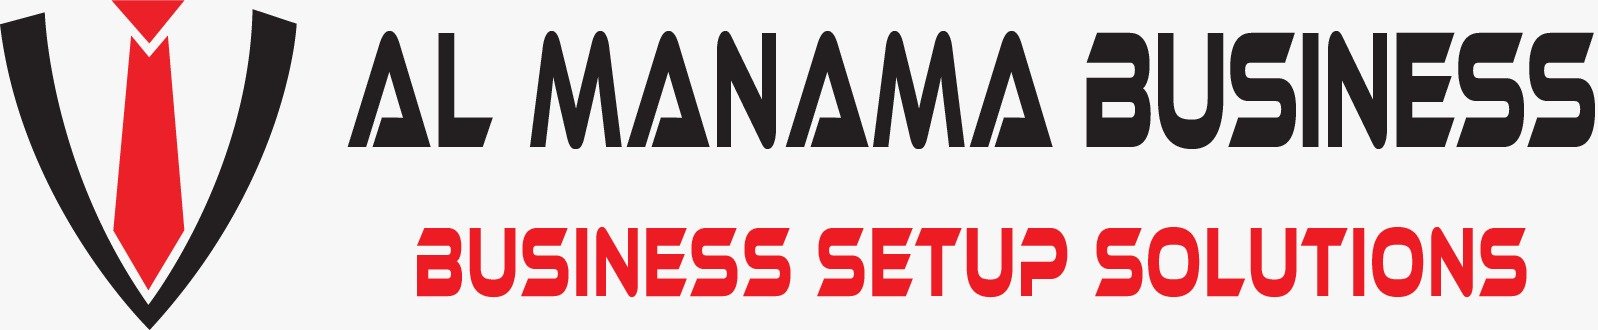 Al Manama Business logo